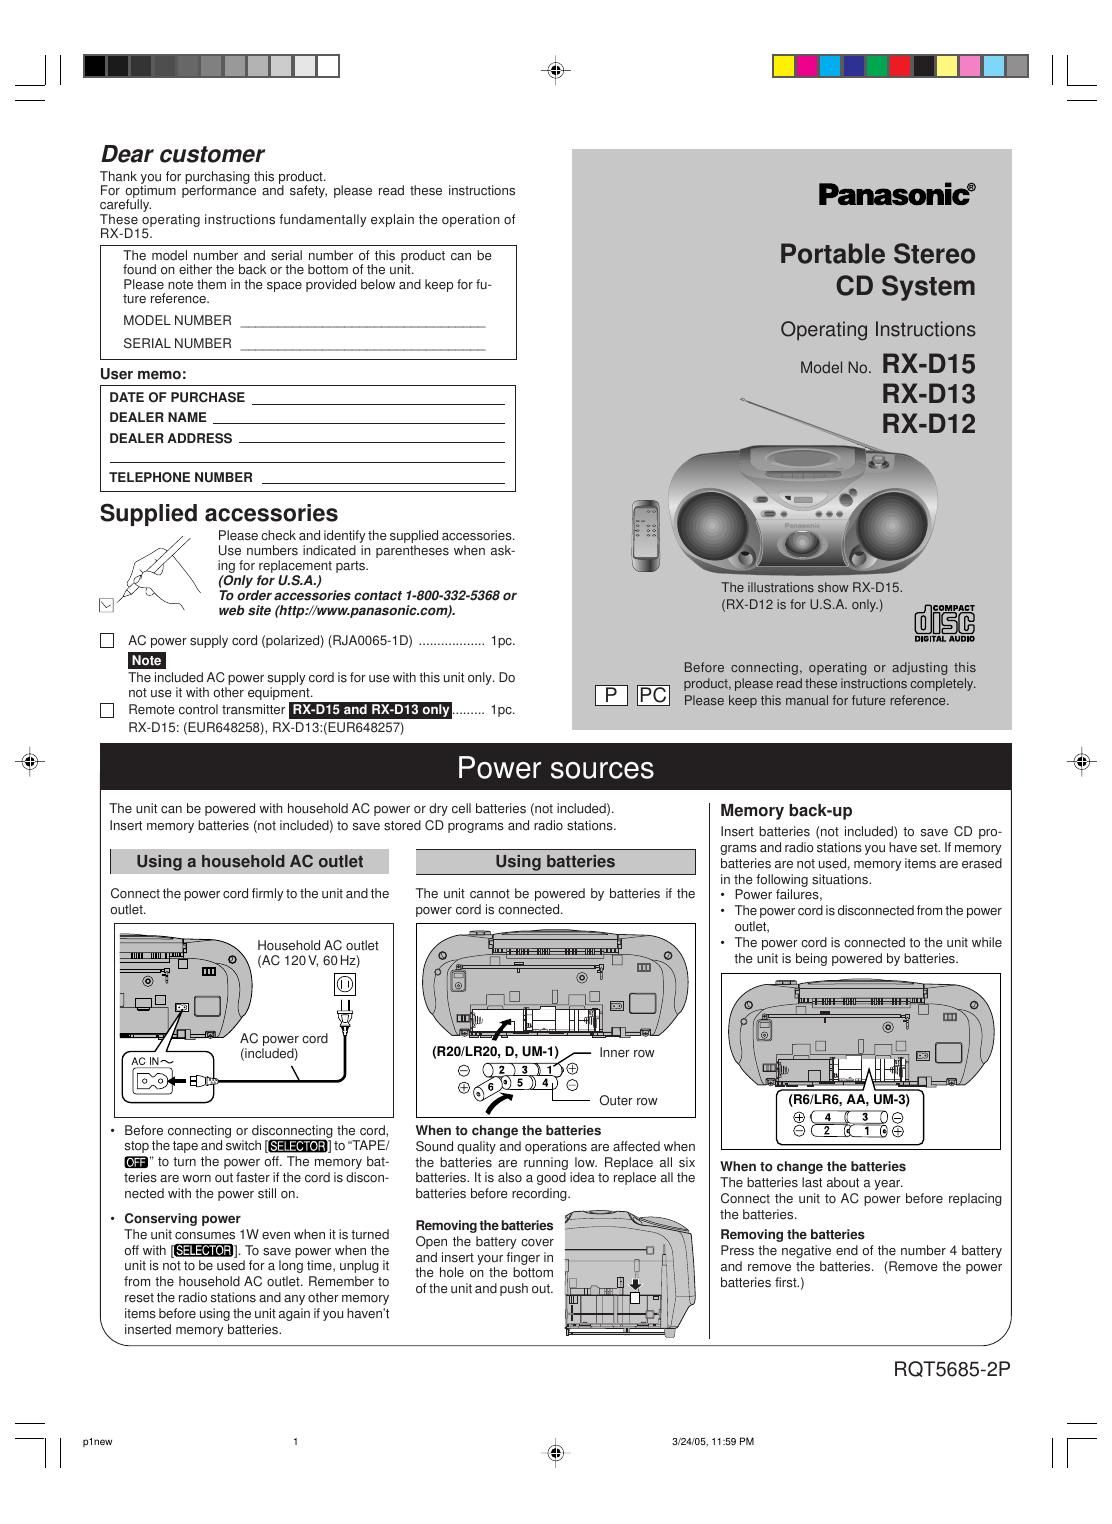 panasonic rx d 12 owners manual